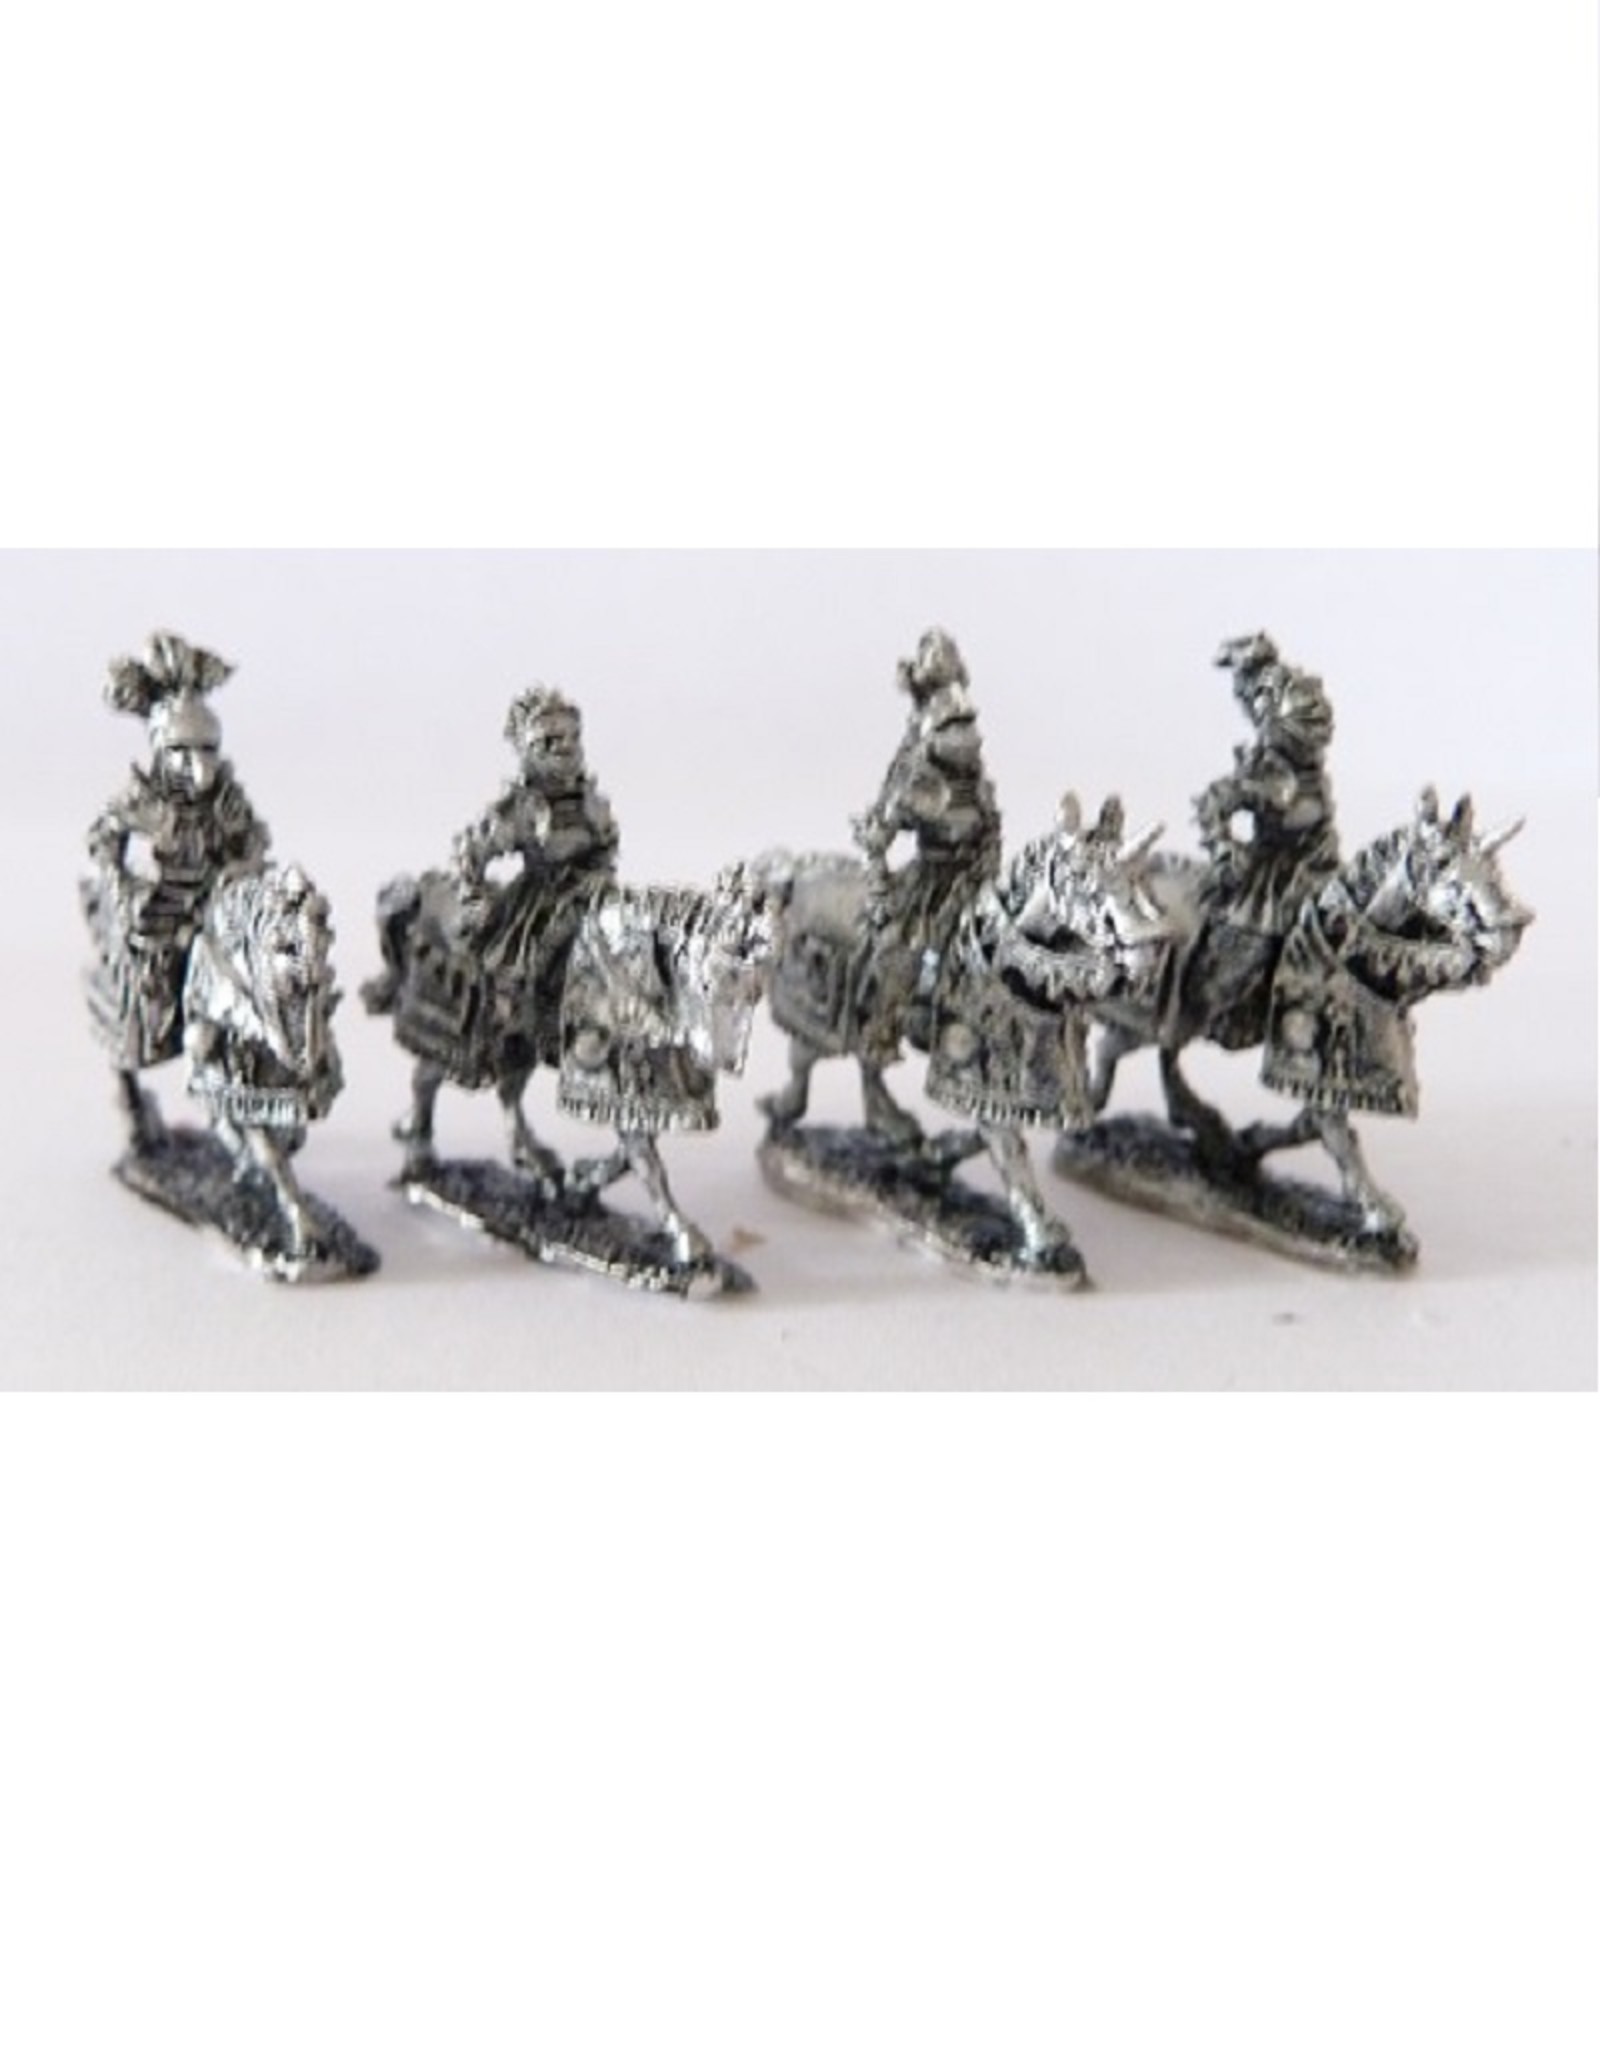 Venexia GI04 - Gendarmes, Levelled Lance, Barded Horses